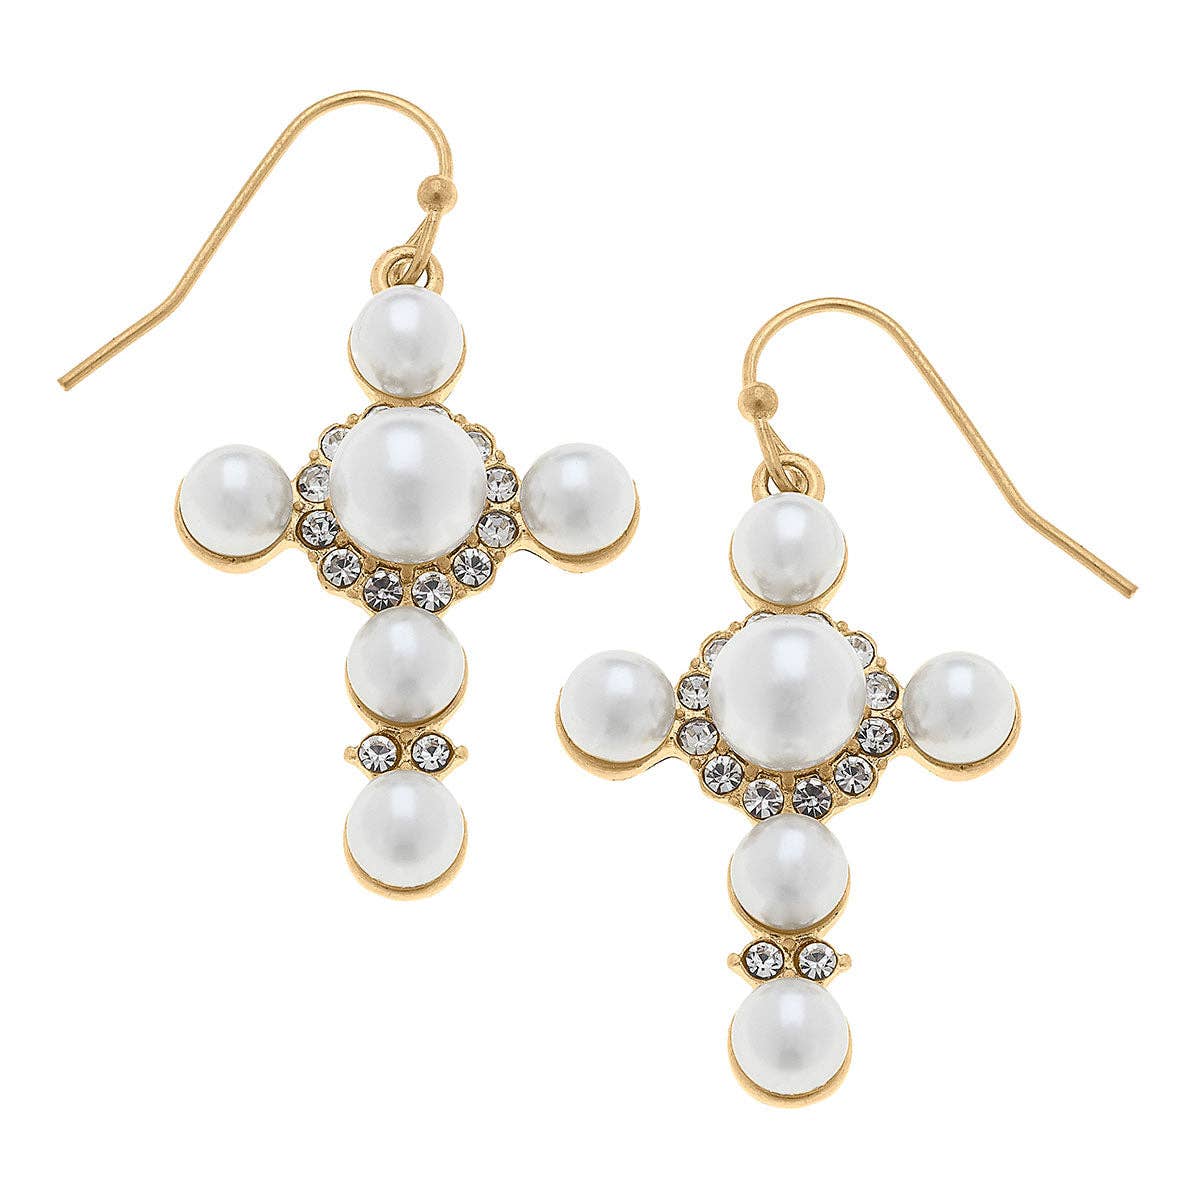 Frances Pearl & Rhinestone Cross Earrings in Ivory